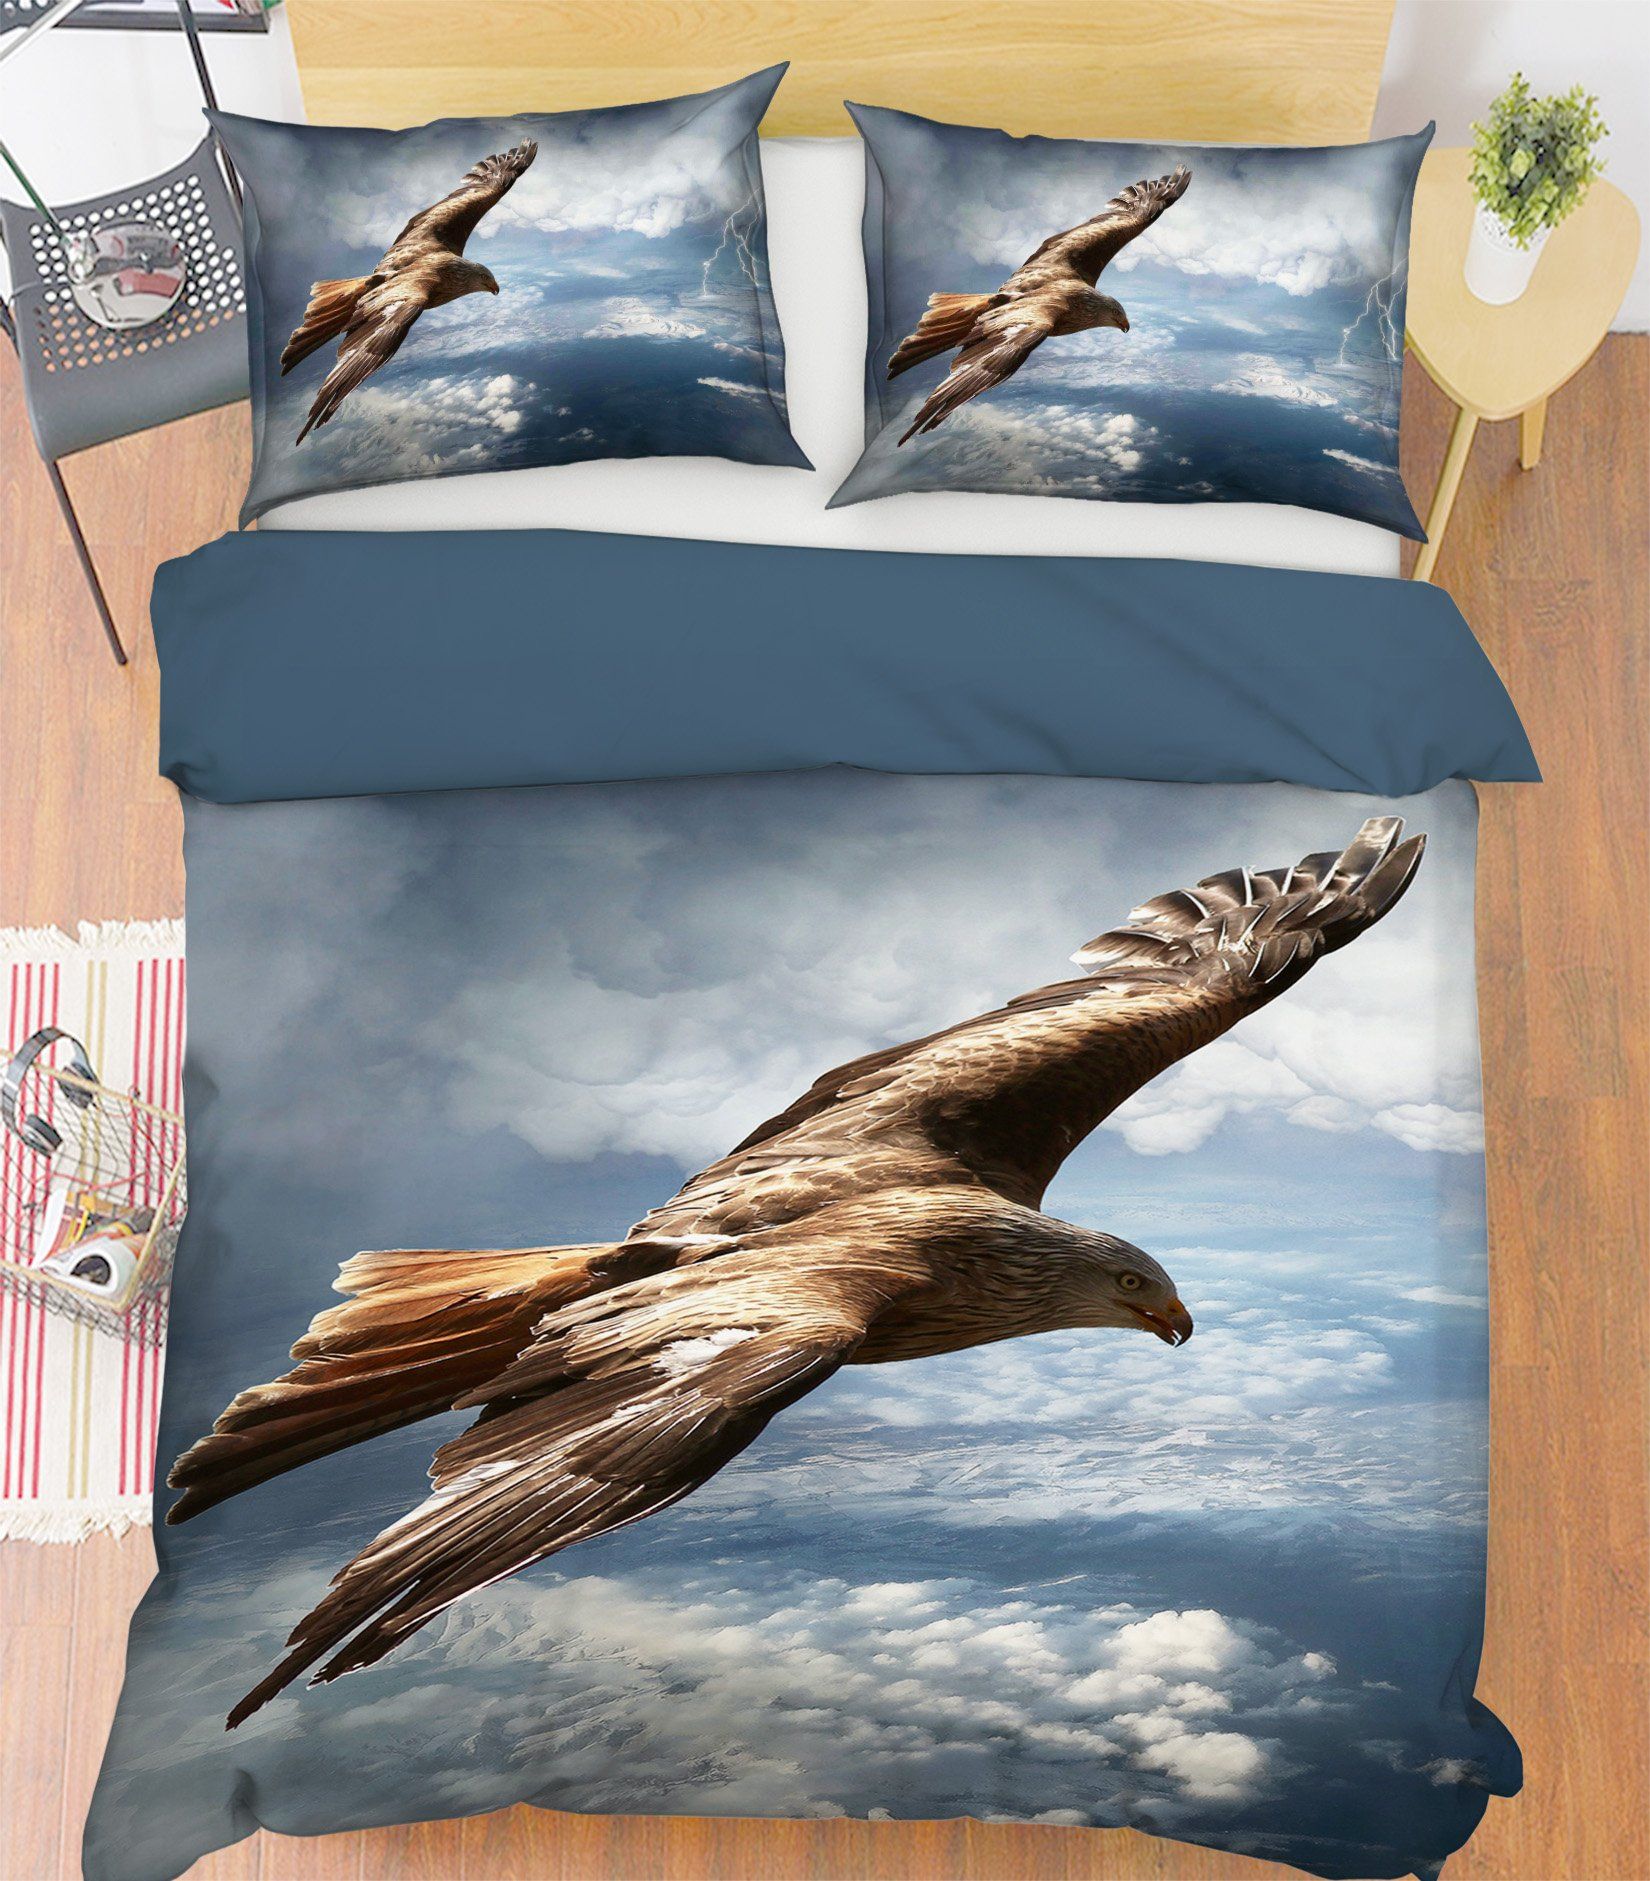 3D Eagle Sea 1911 Bed Pillowcases Quilt Quiet Covers AJ Creativity Home 